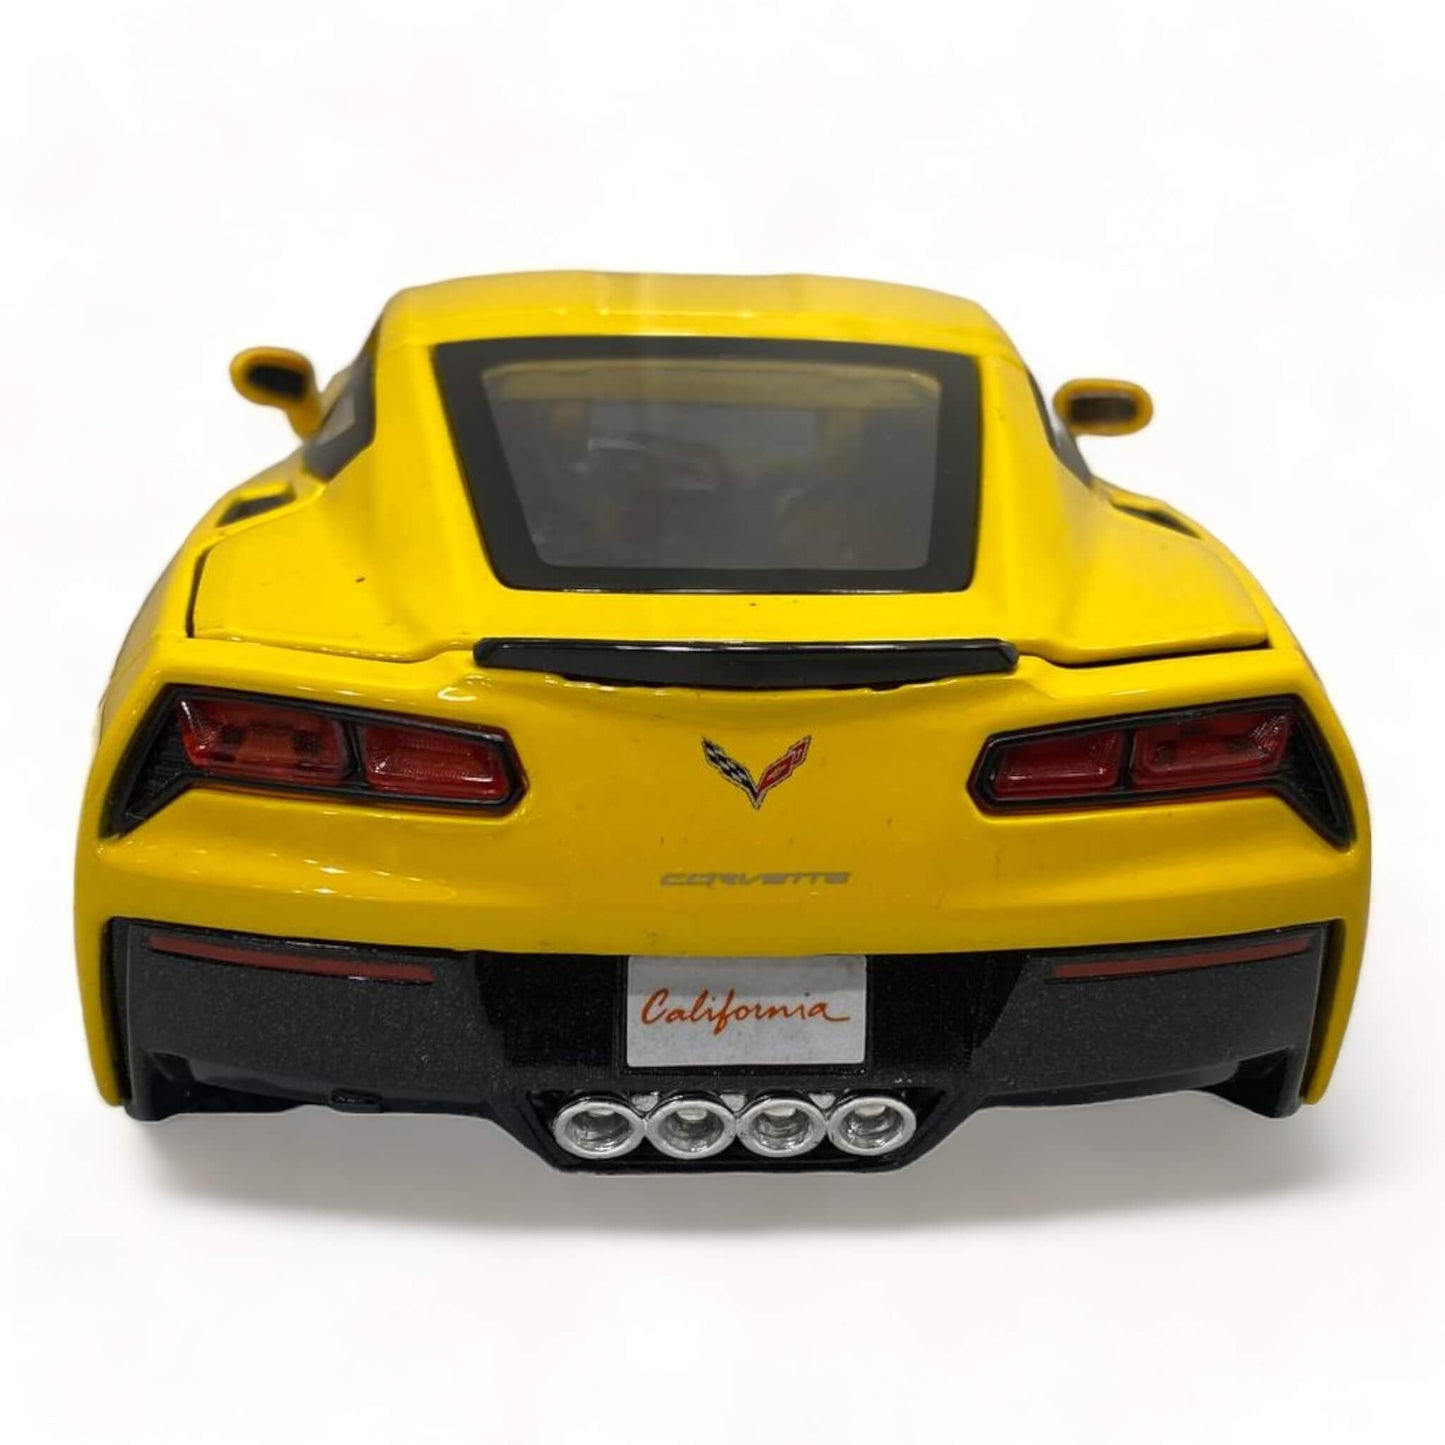 1/18 Diecast Maisto Chevrolet Corvette Stingray Yellow 2014 Scale Model Car|Sold in Dturman.com Dubai UAE.